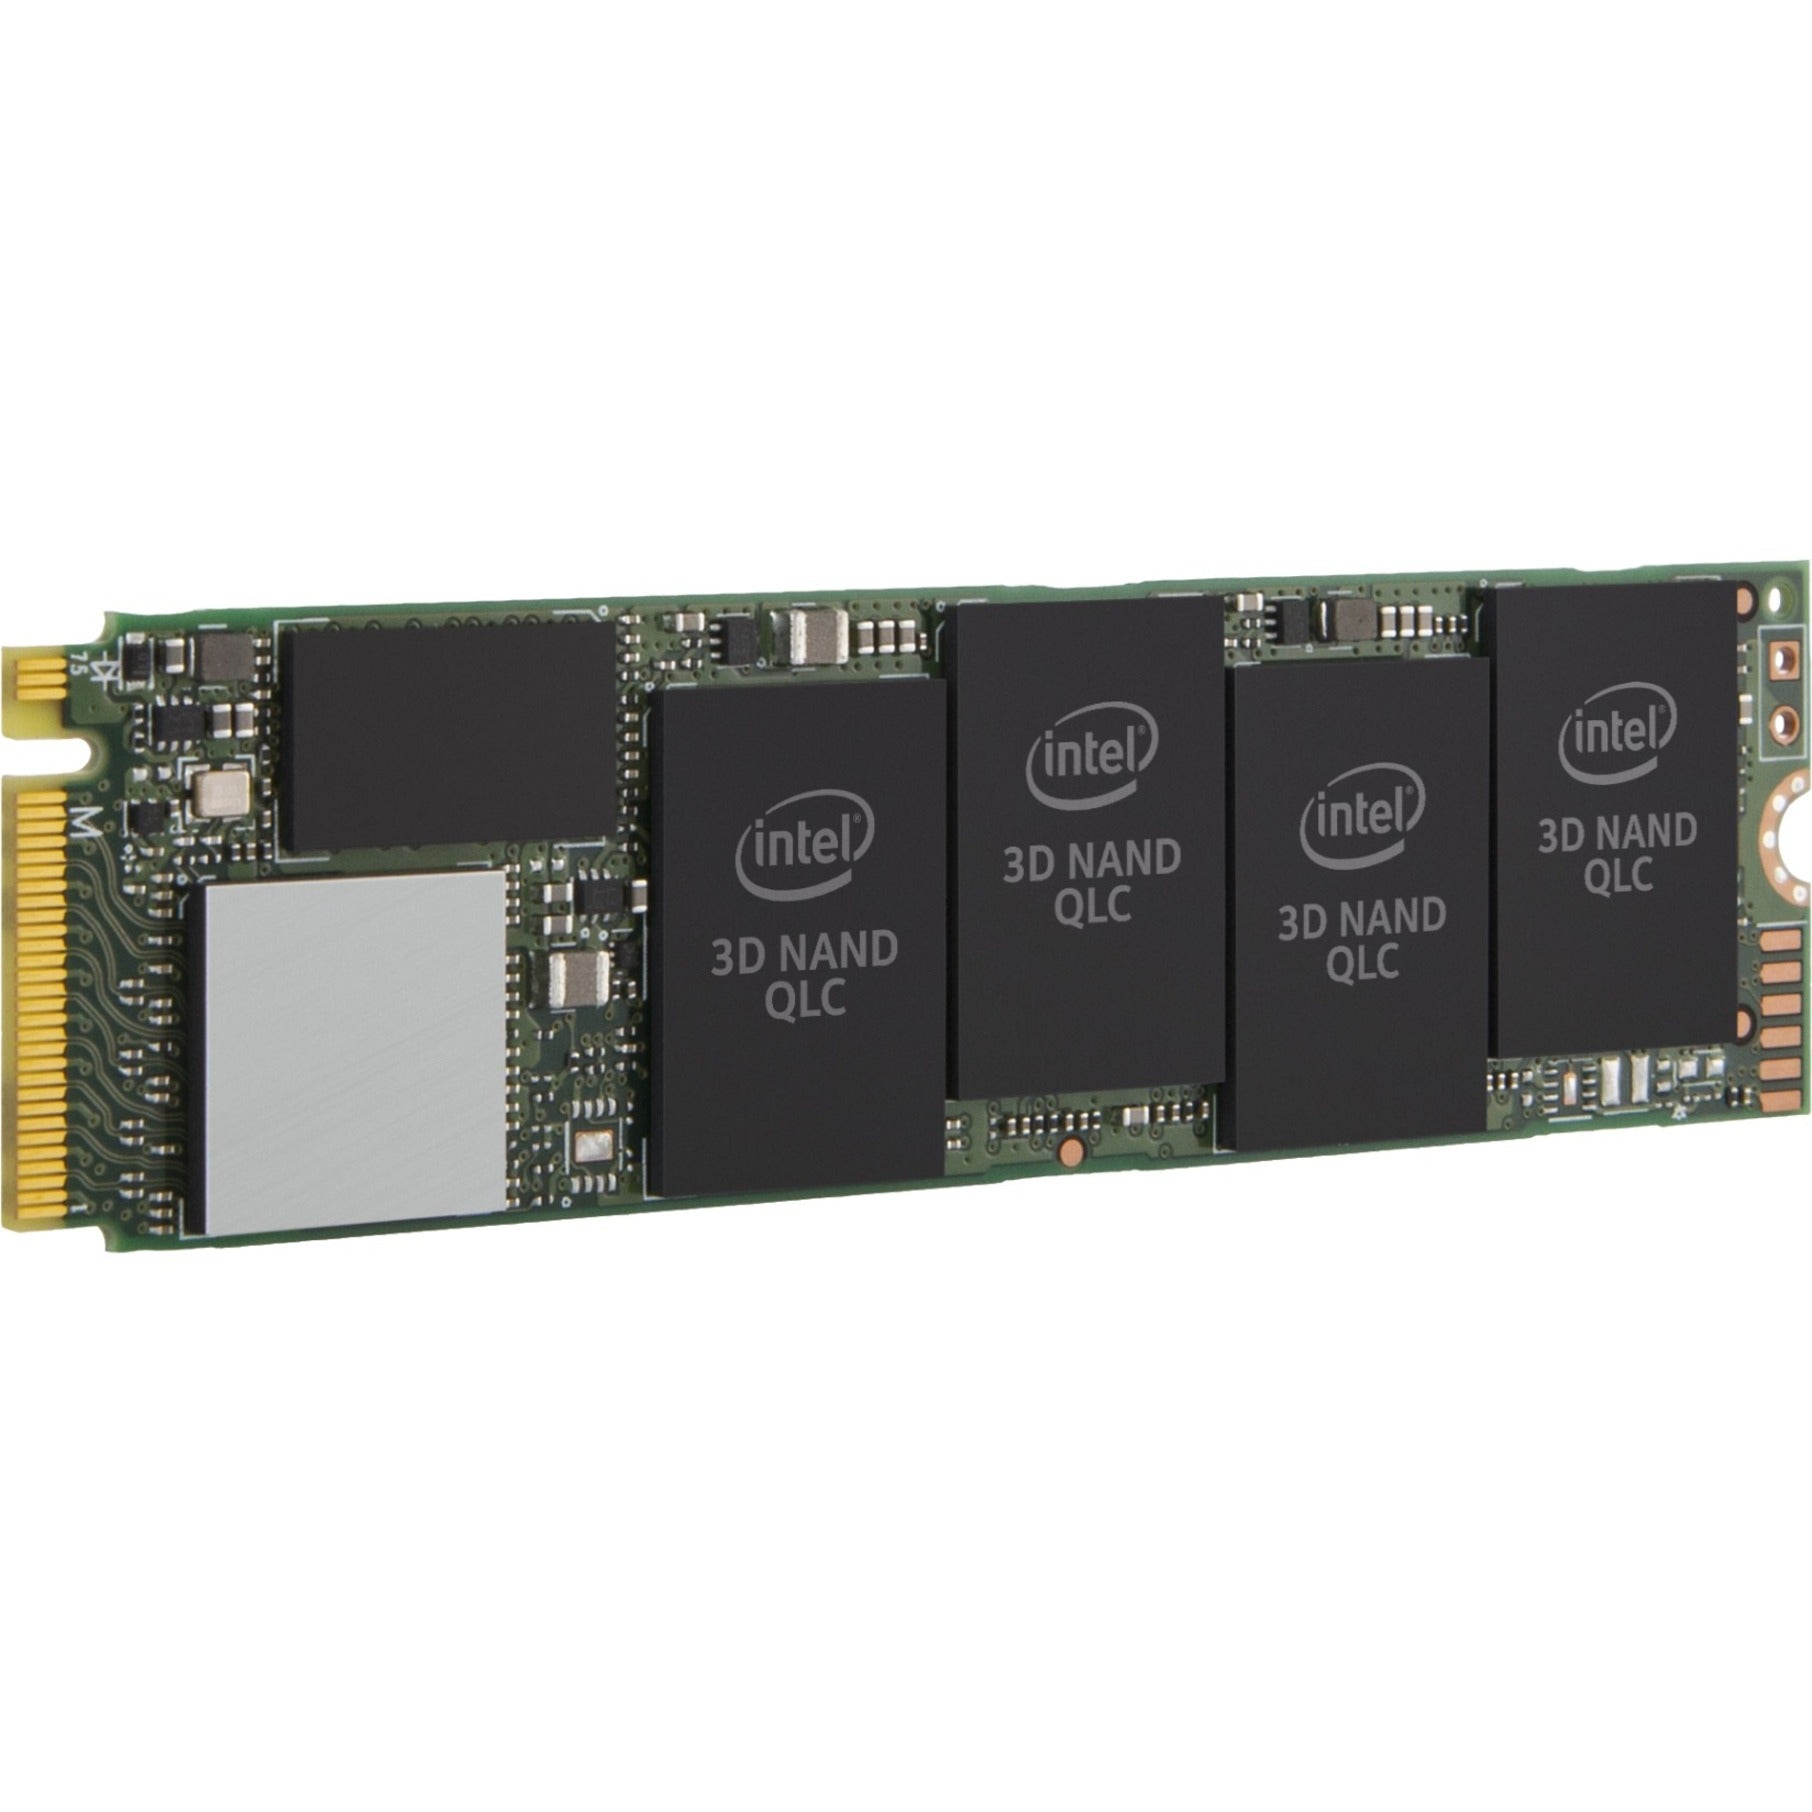 Intel SSDPEKNW020T8X1 660p Solid State Drive, 2TB PCIe 3.0 x4, 1800 MB/s Read/Write Speeds